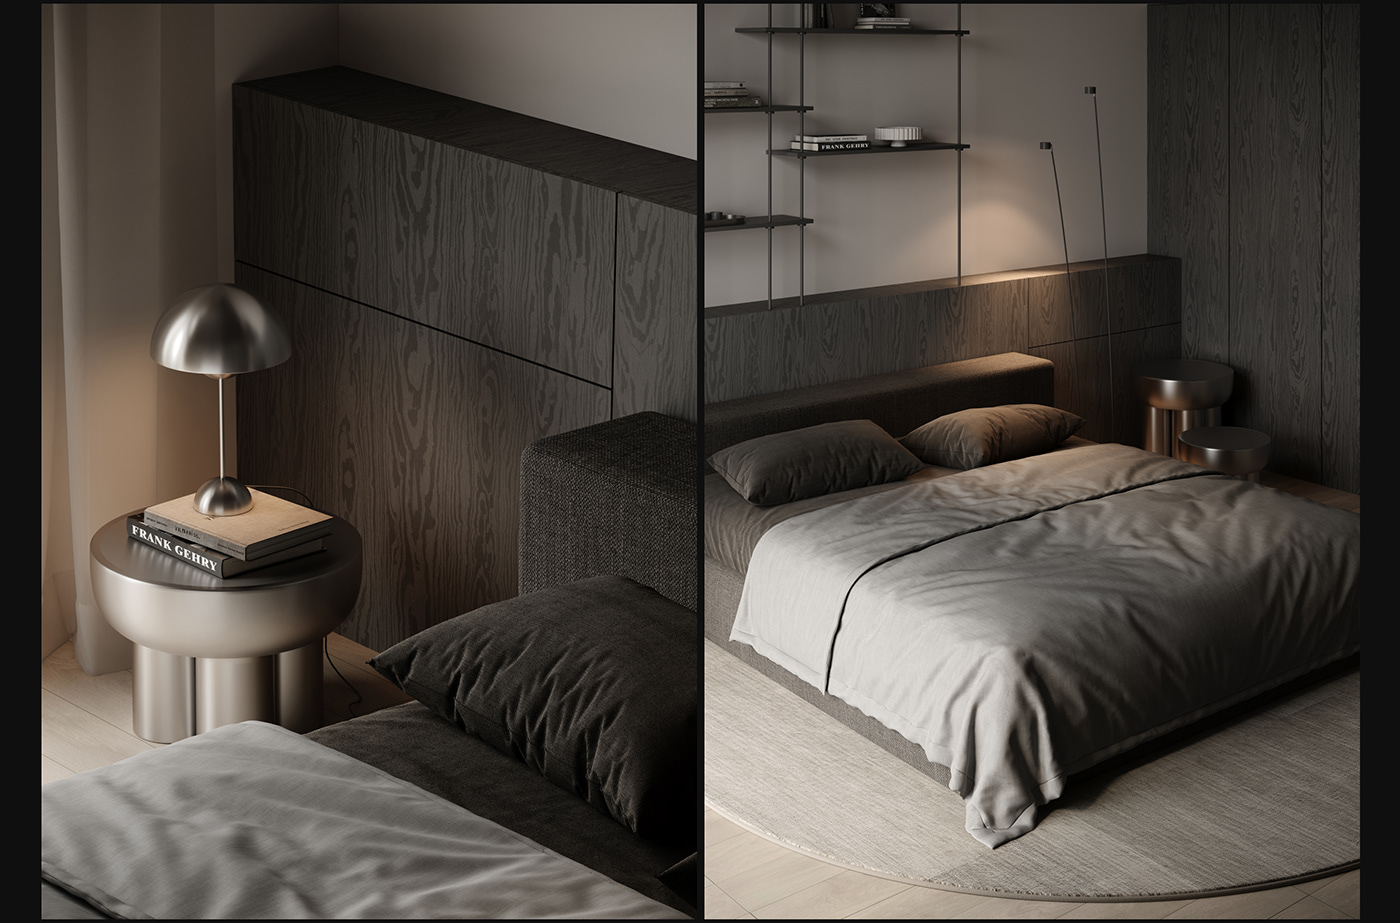 interior design  visualization 3ds max CGI modern architecture archviz studio naturallight home